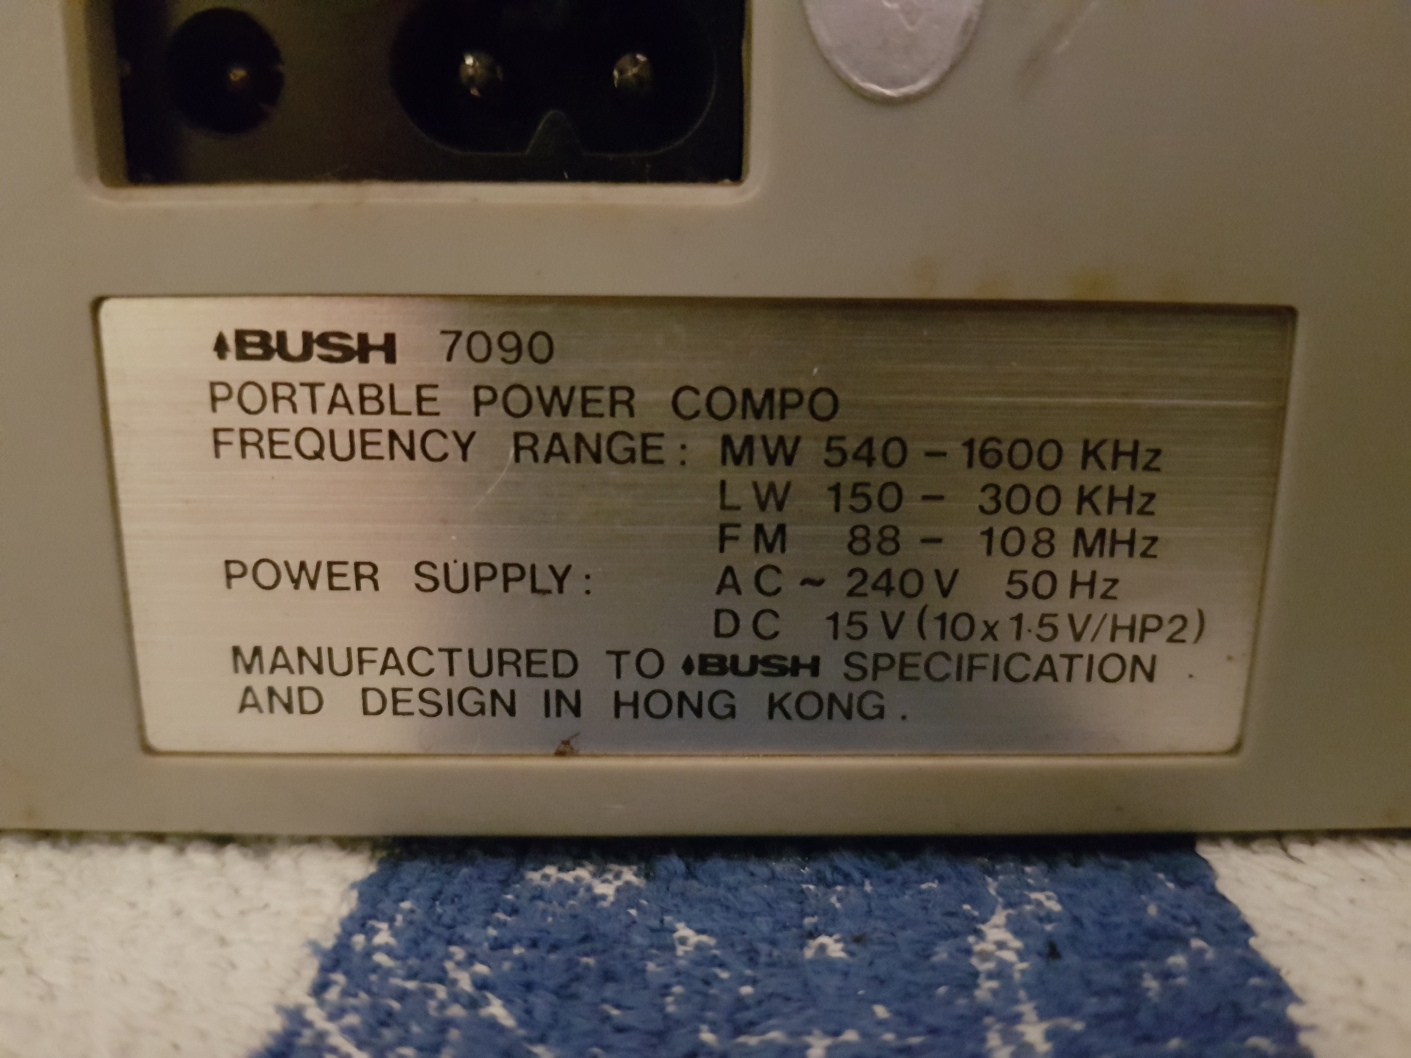 Bush 7090 Portable Power Compo - February 2017 (10).jpg